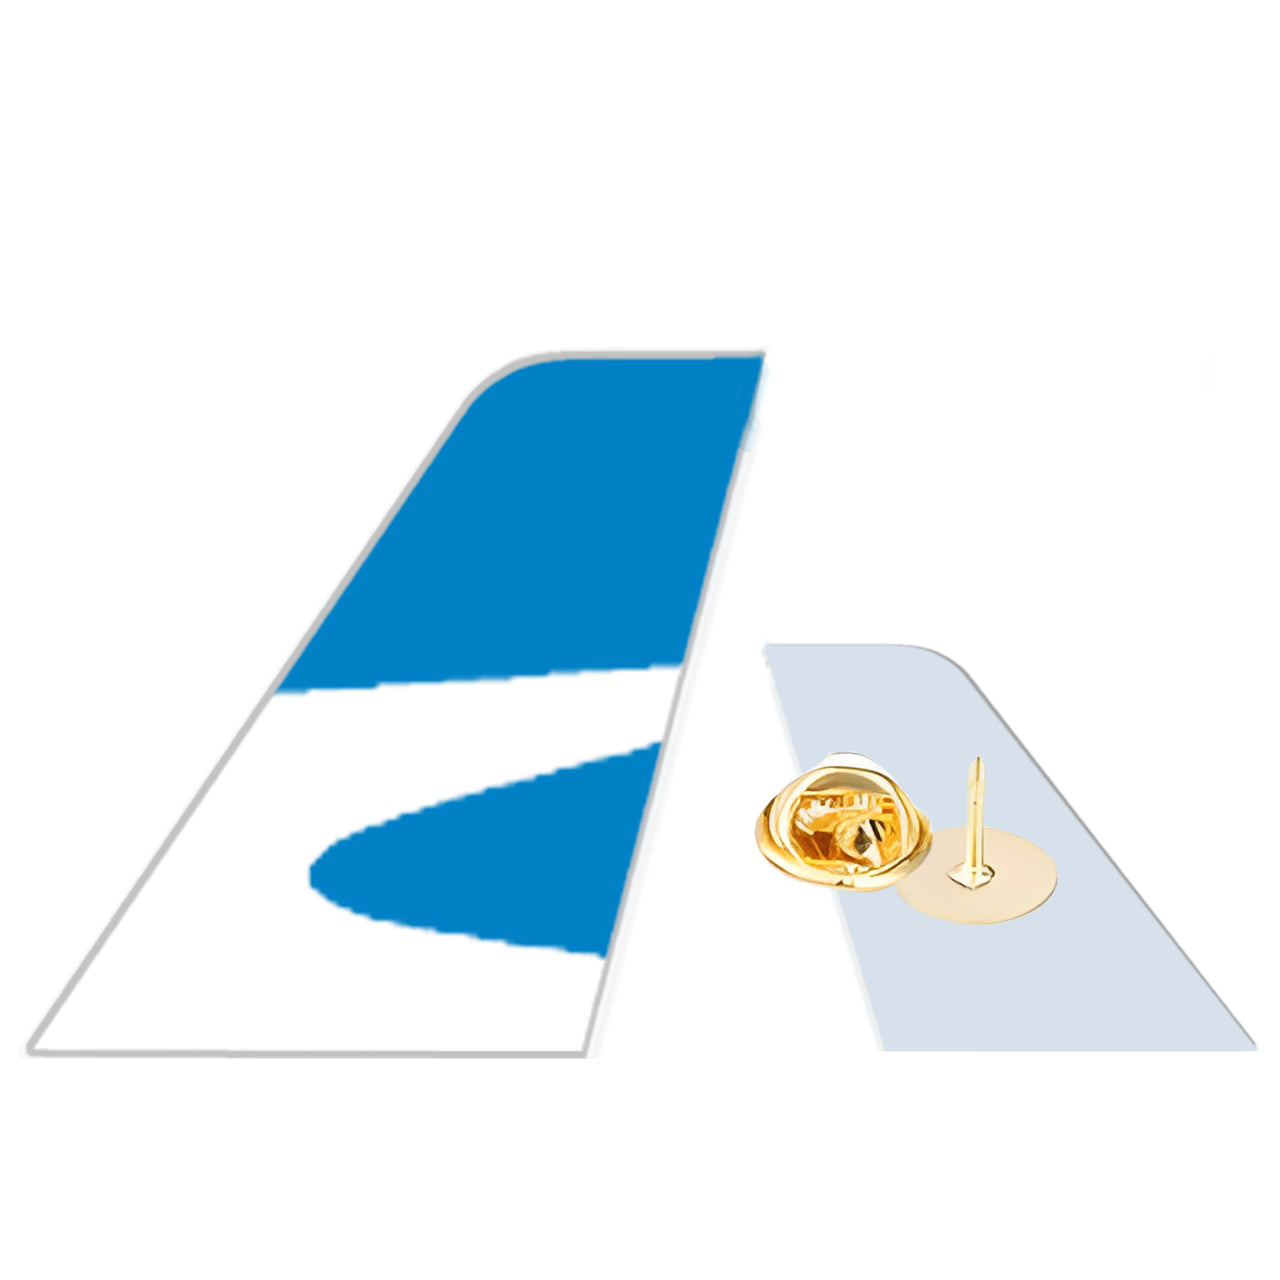 Aerolineas Argentina Designed Tail Shape Badges & Pins